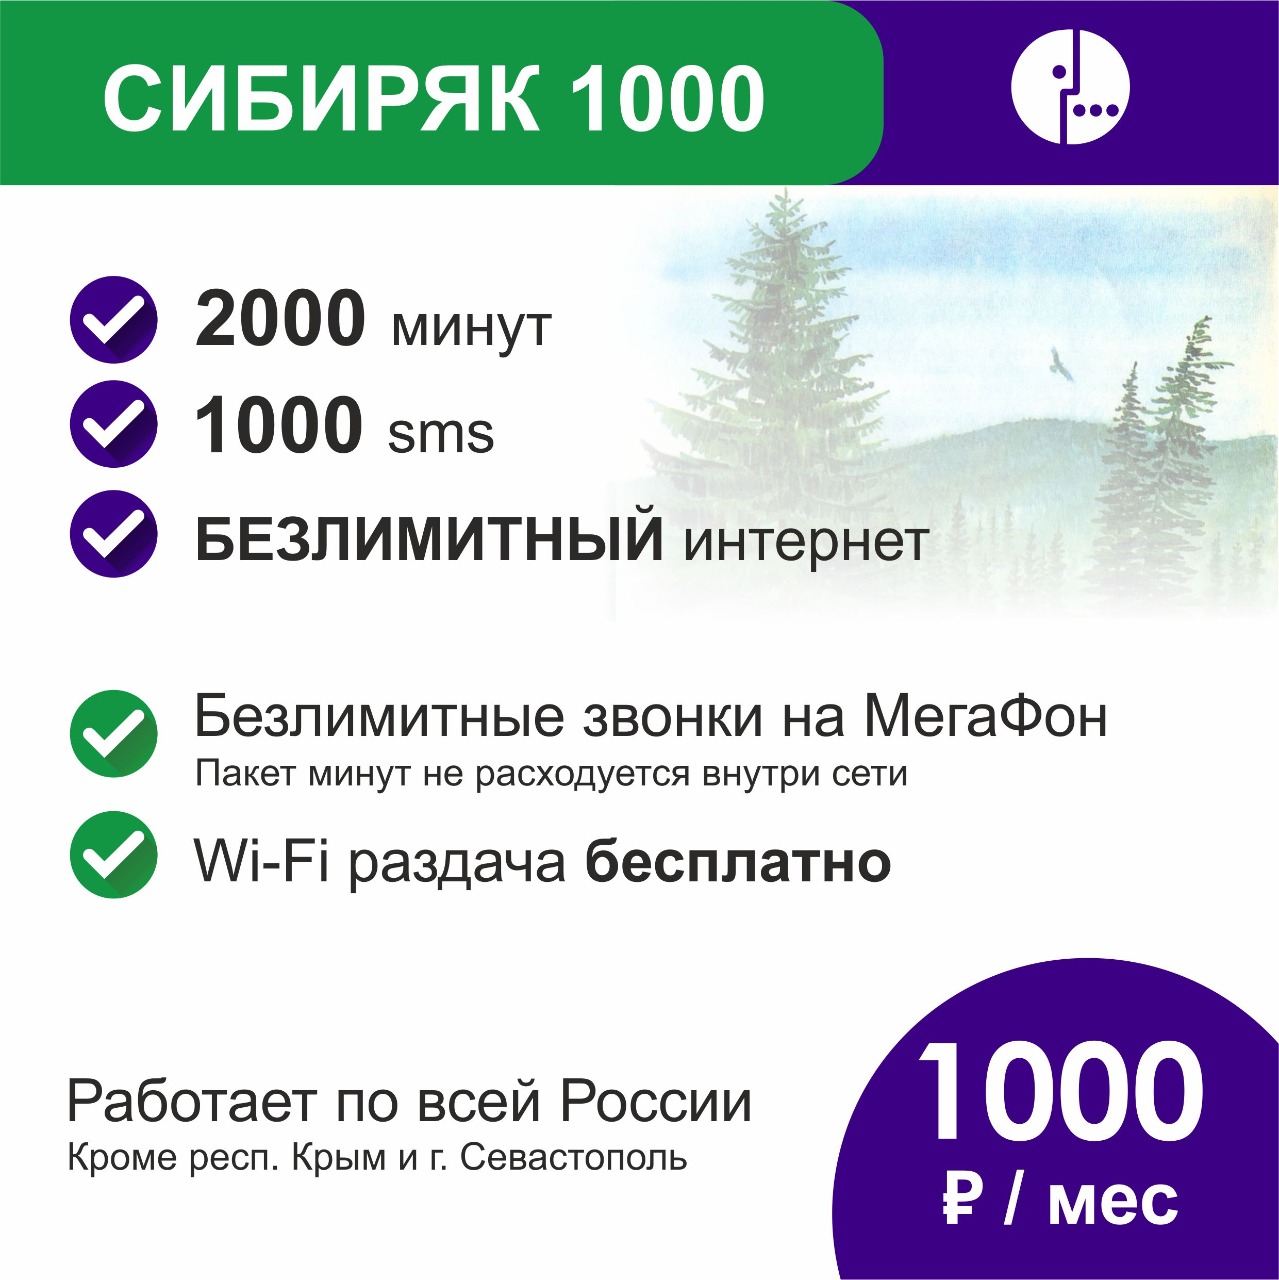 Саяногорск Инфо - whatsapp-image-2020-08-21-at-114742-1.jpeg, Скачано: 463